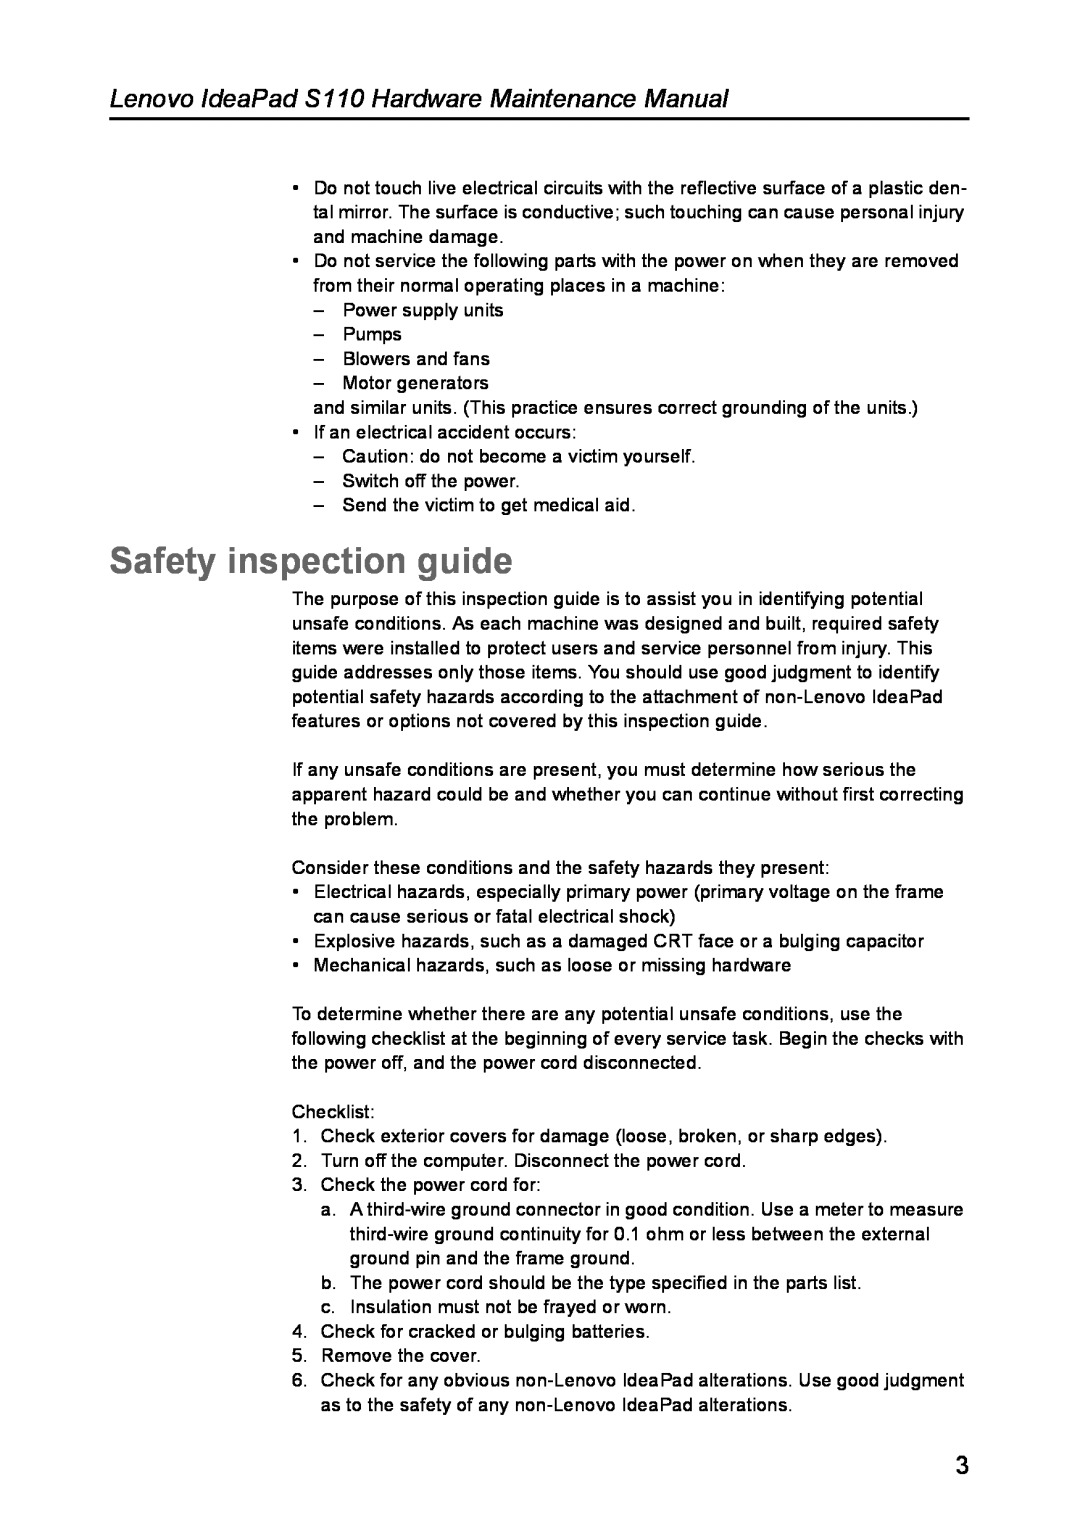 Lenovo manual Safety inspection guide, Lenovo IdeaPad S110 Hardware Maintenance Manual 